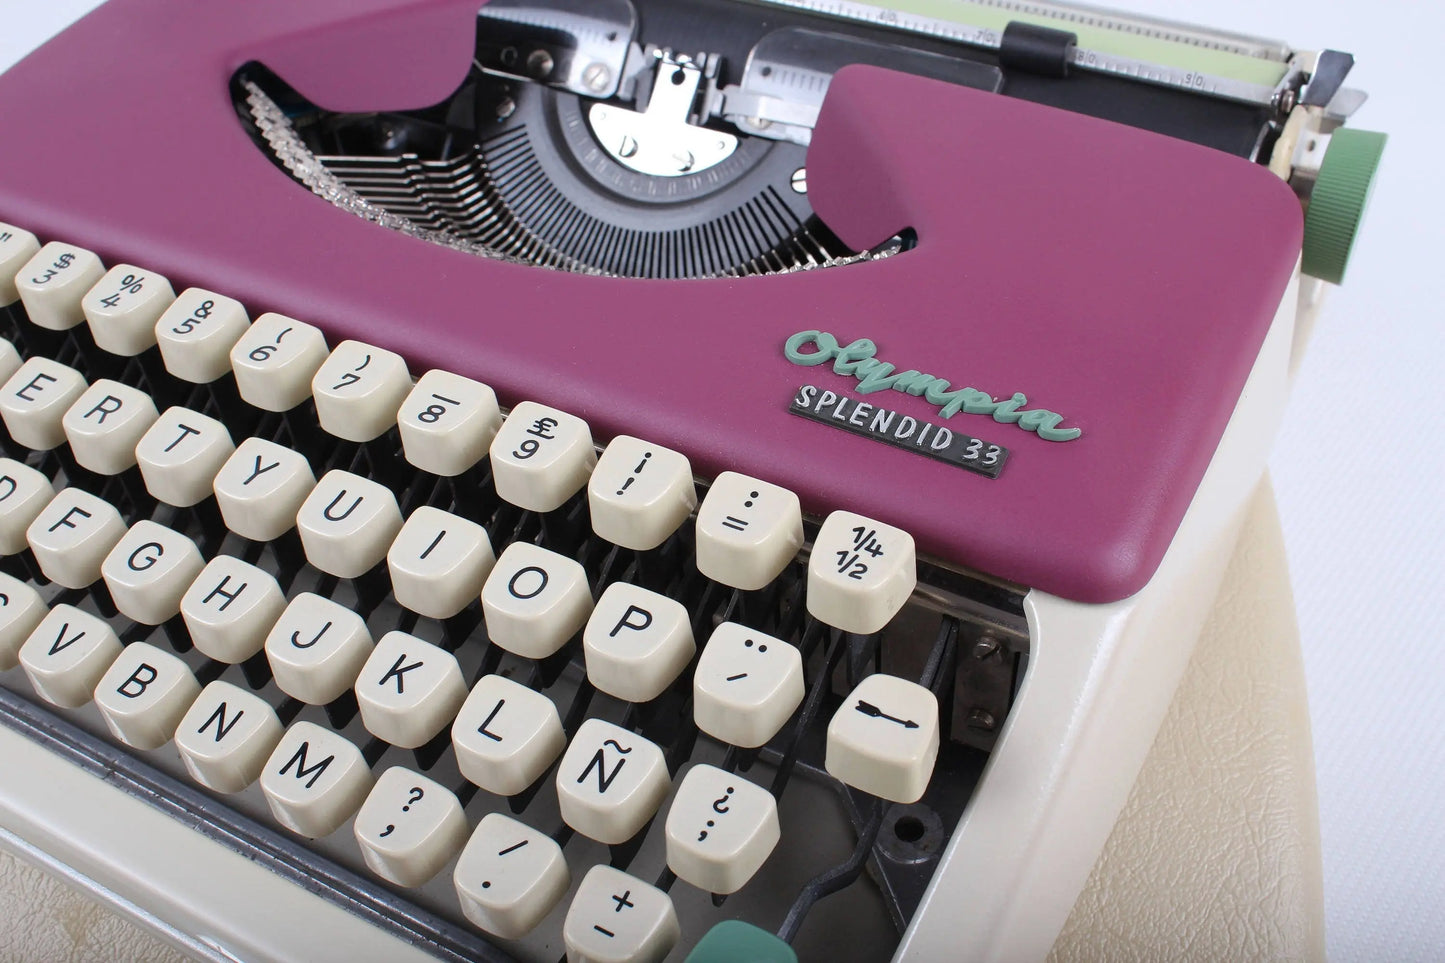 Olympia Splendid 33 Burgundy & Cream, Vintage, Mint Condition, Manual Portable, Professionally Serviced by Typewriter.Company - ElGranero Typewriter.Company